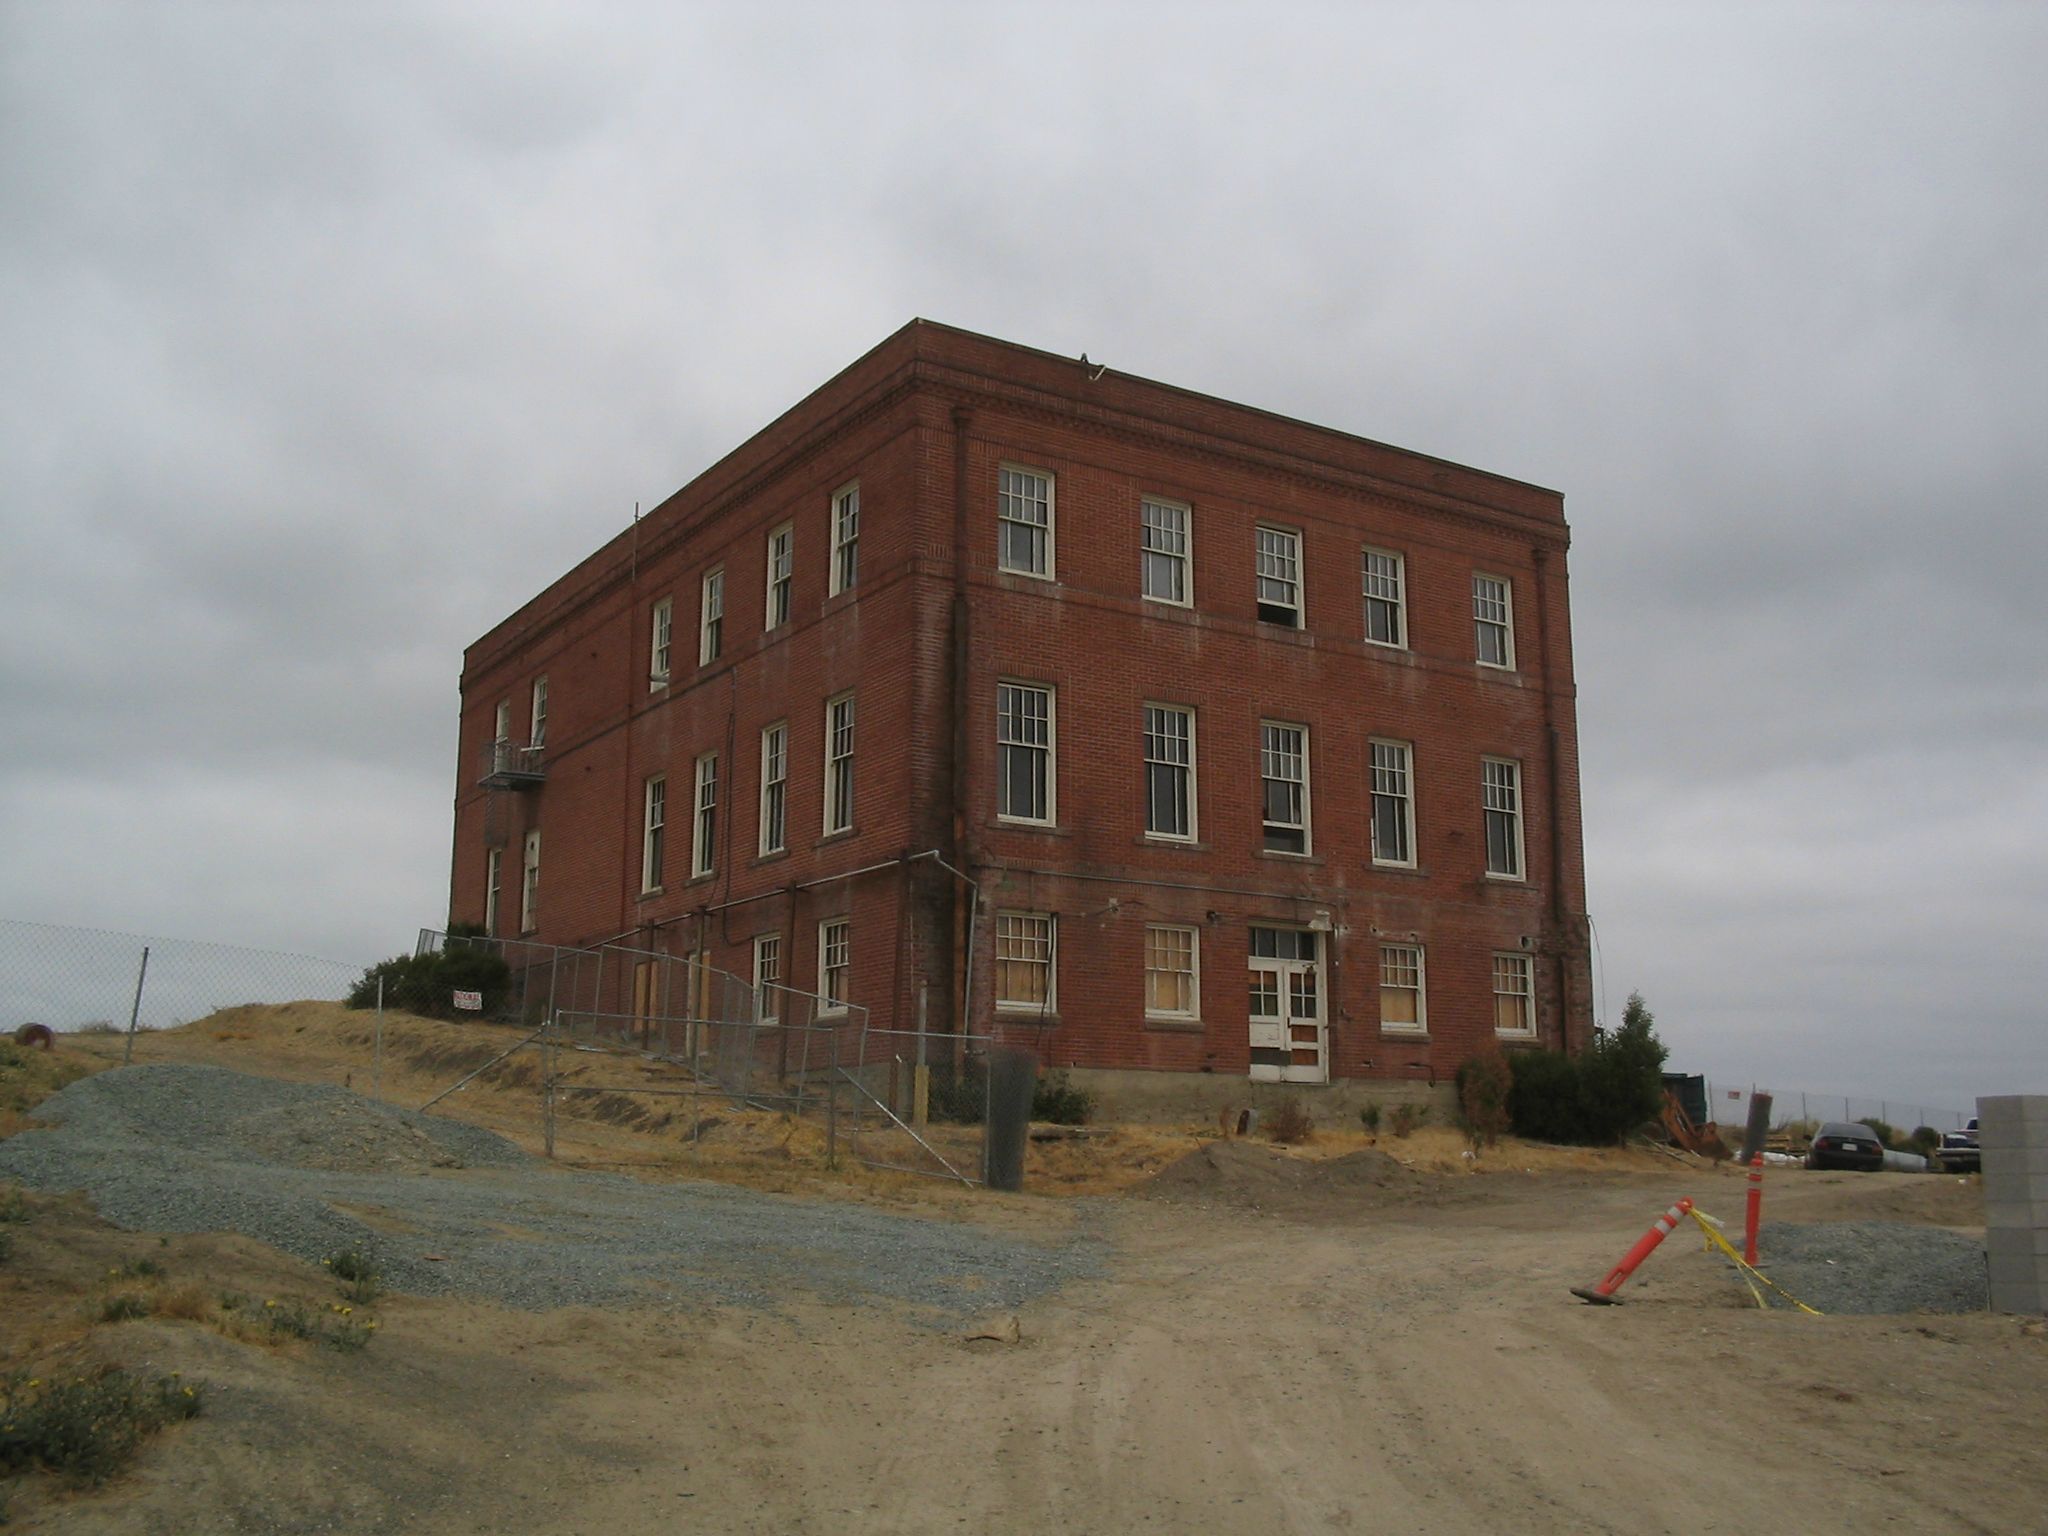 Abandoned factory Crockett CA - Imgur